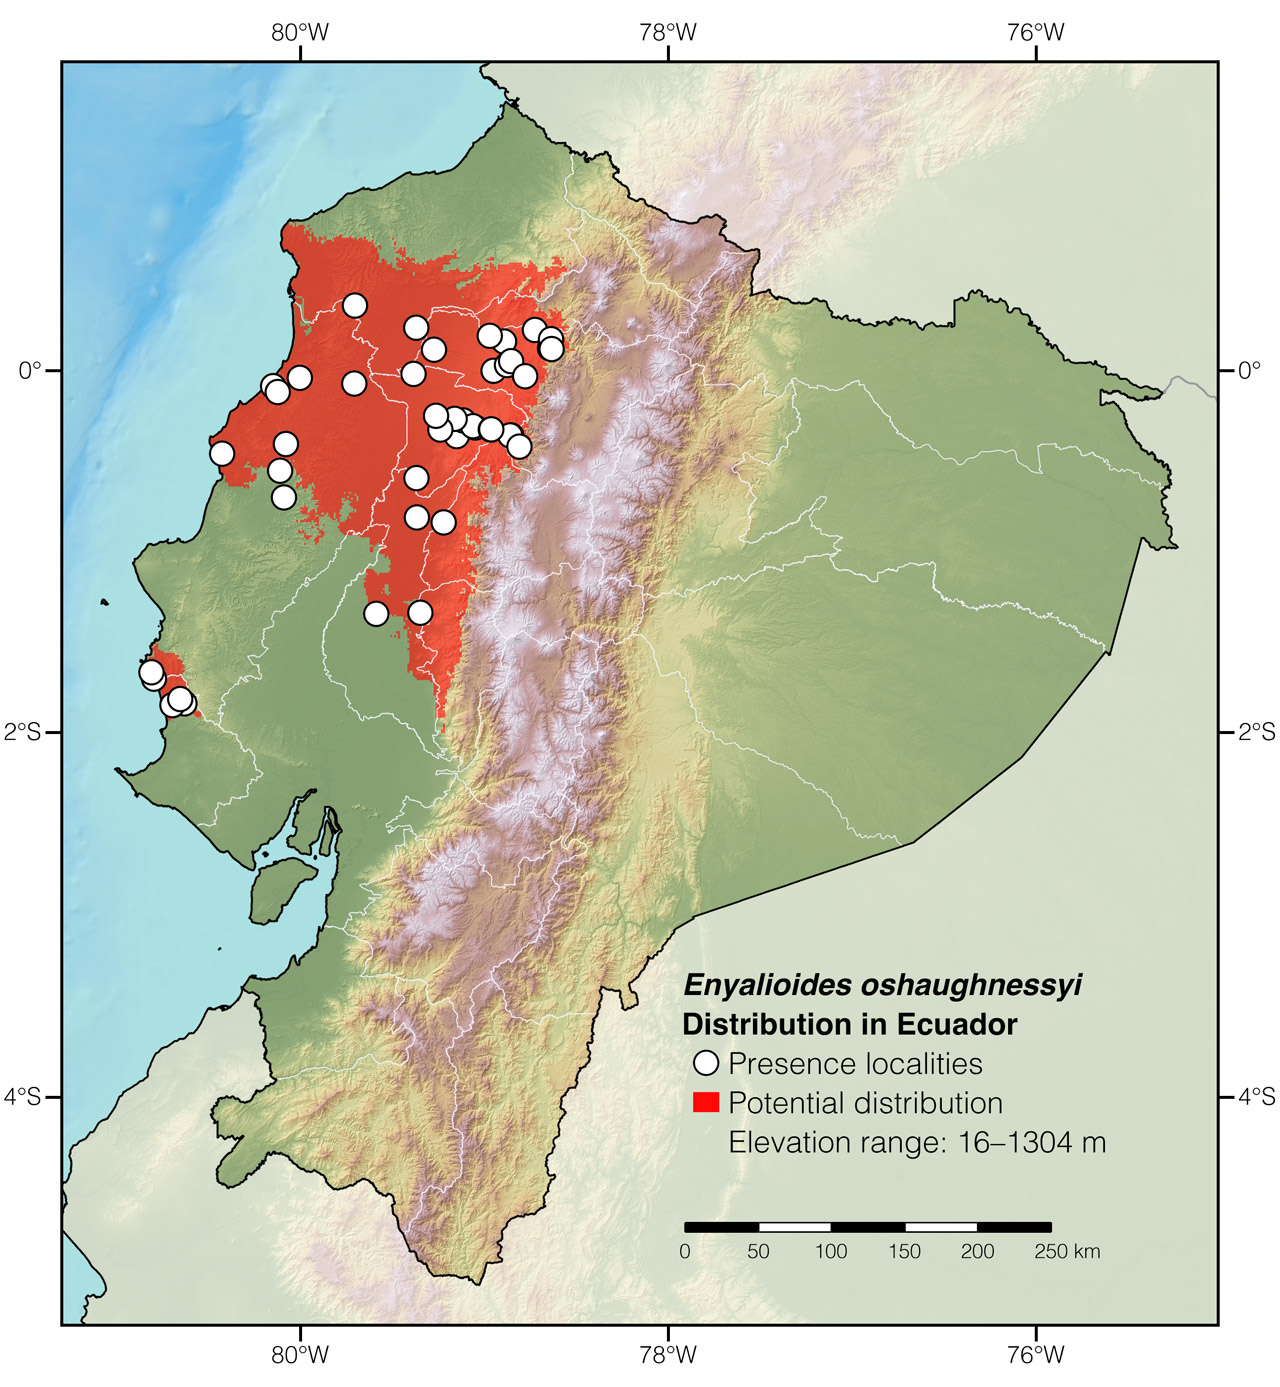 Distribution of Enyalioides oshaughnessyi in Ecuador